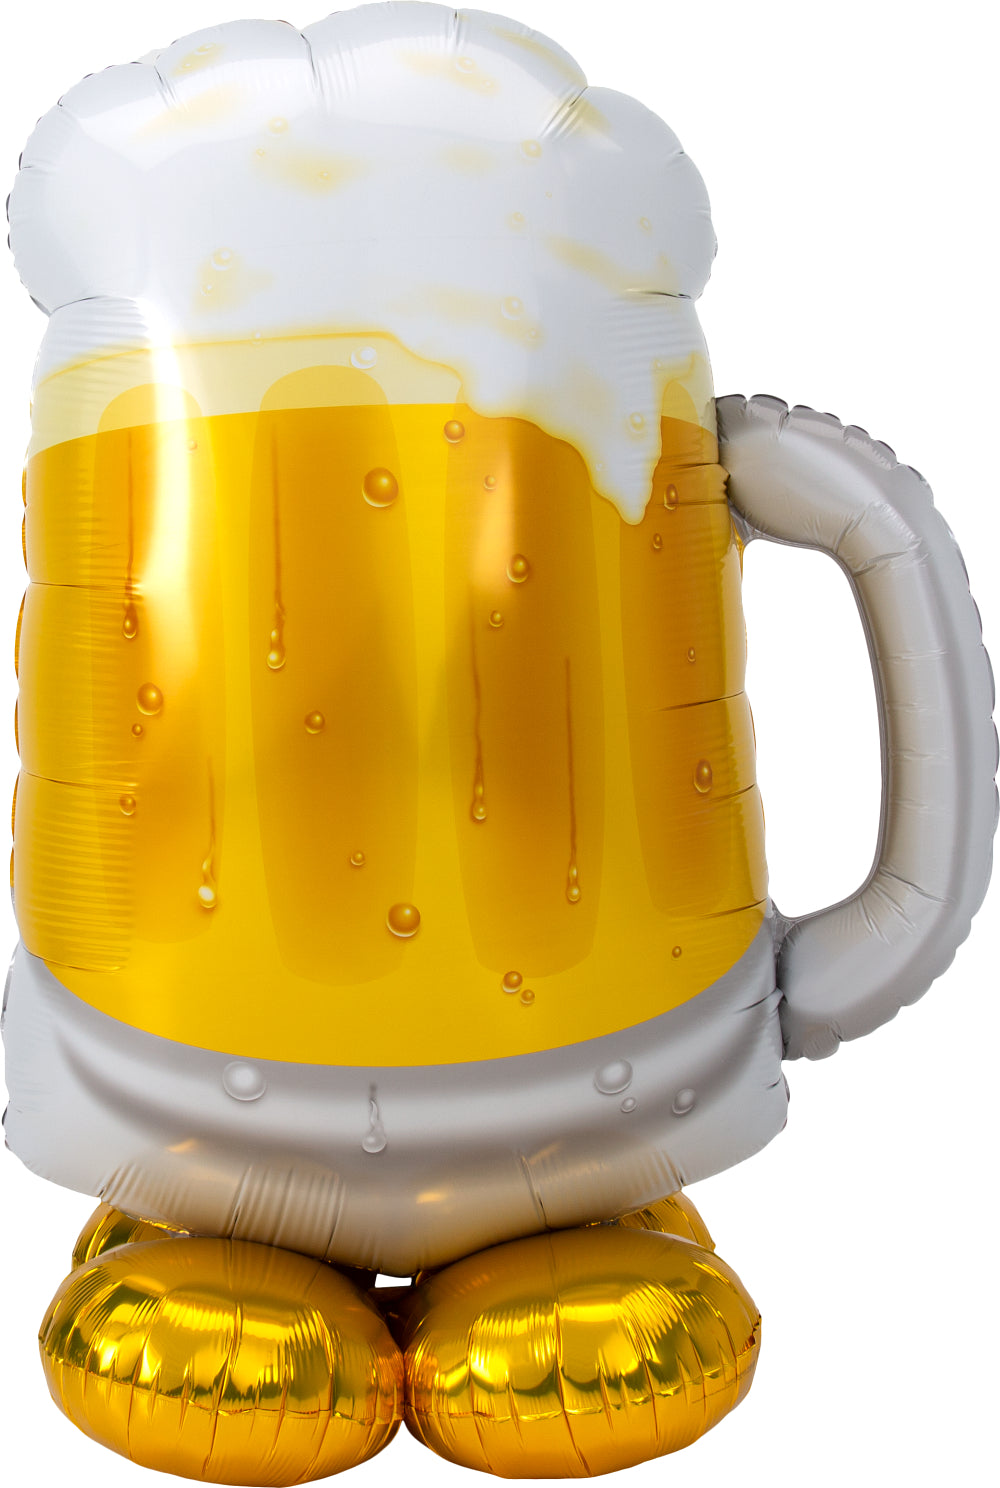 Big Beer Mug AirLoonz™